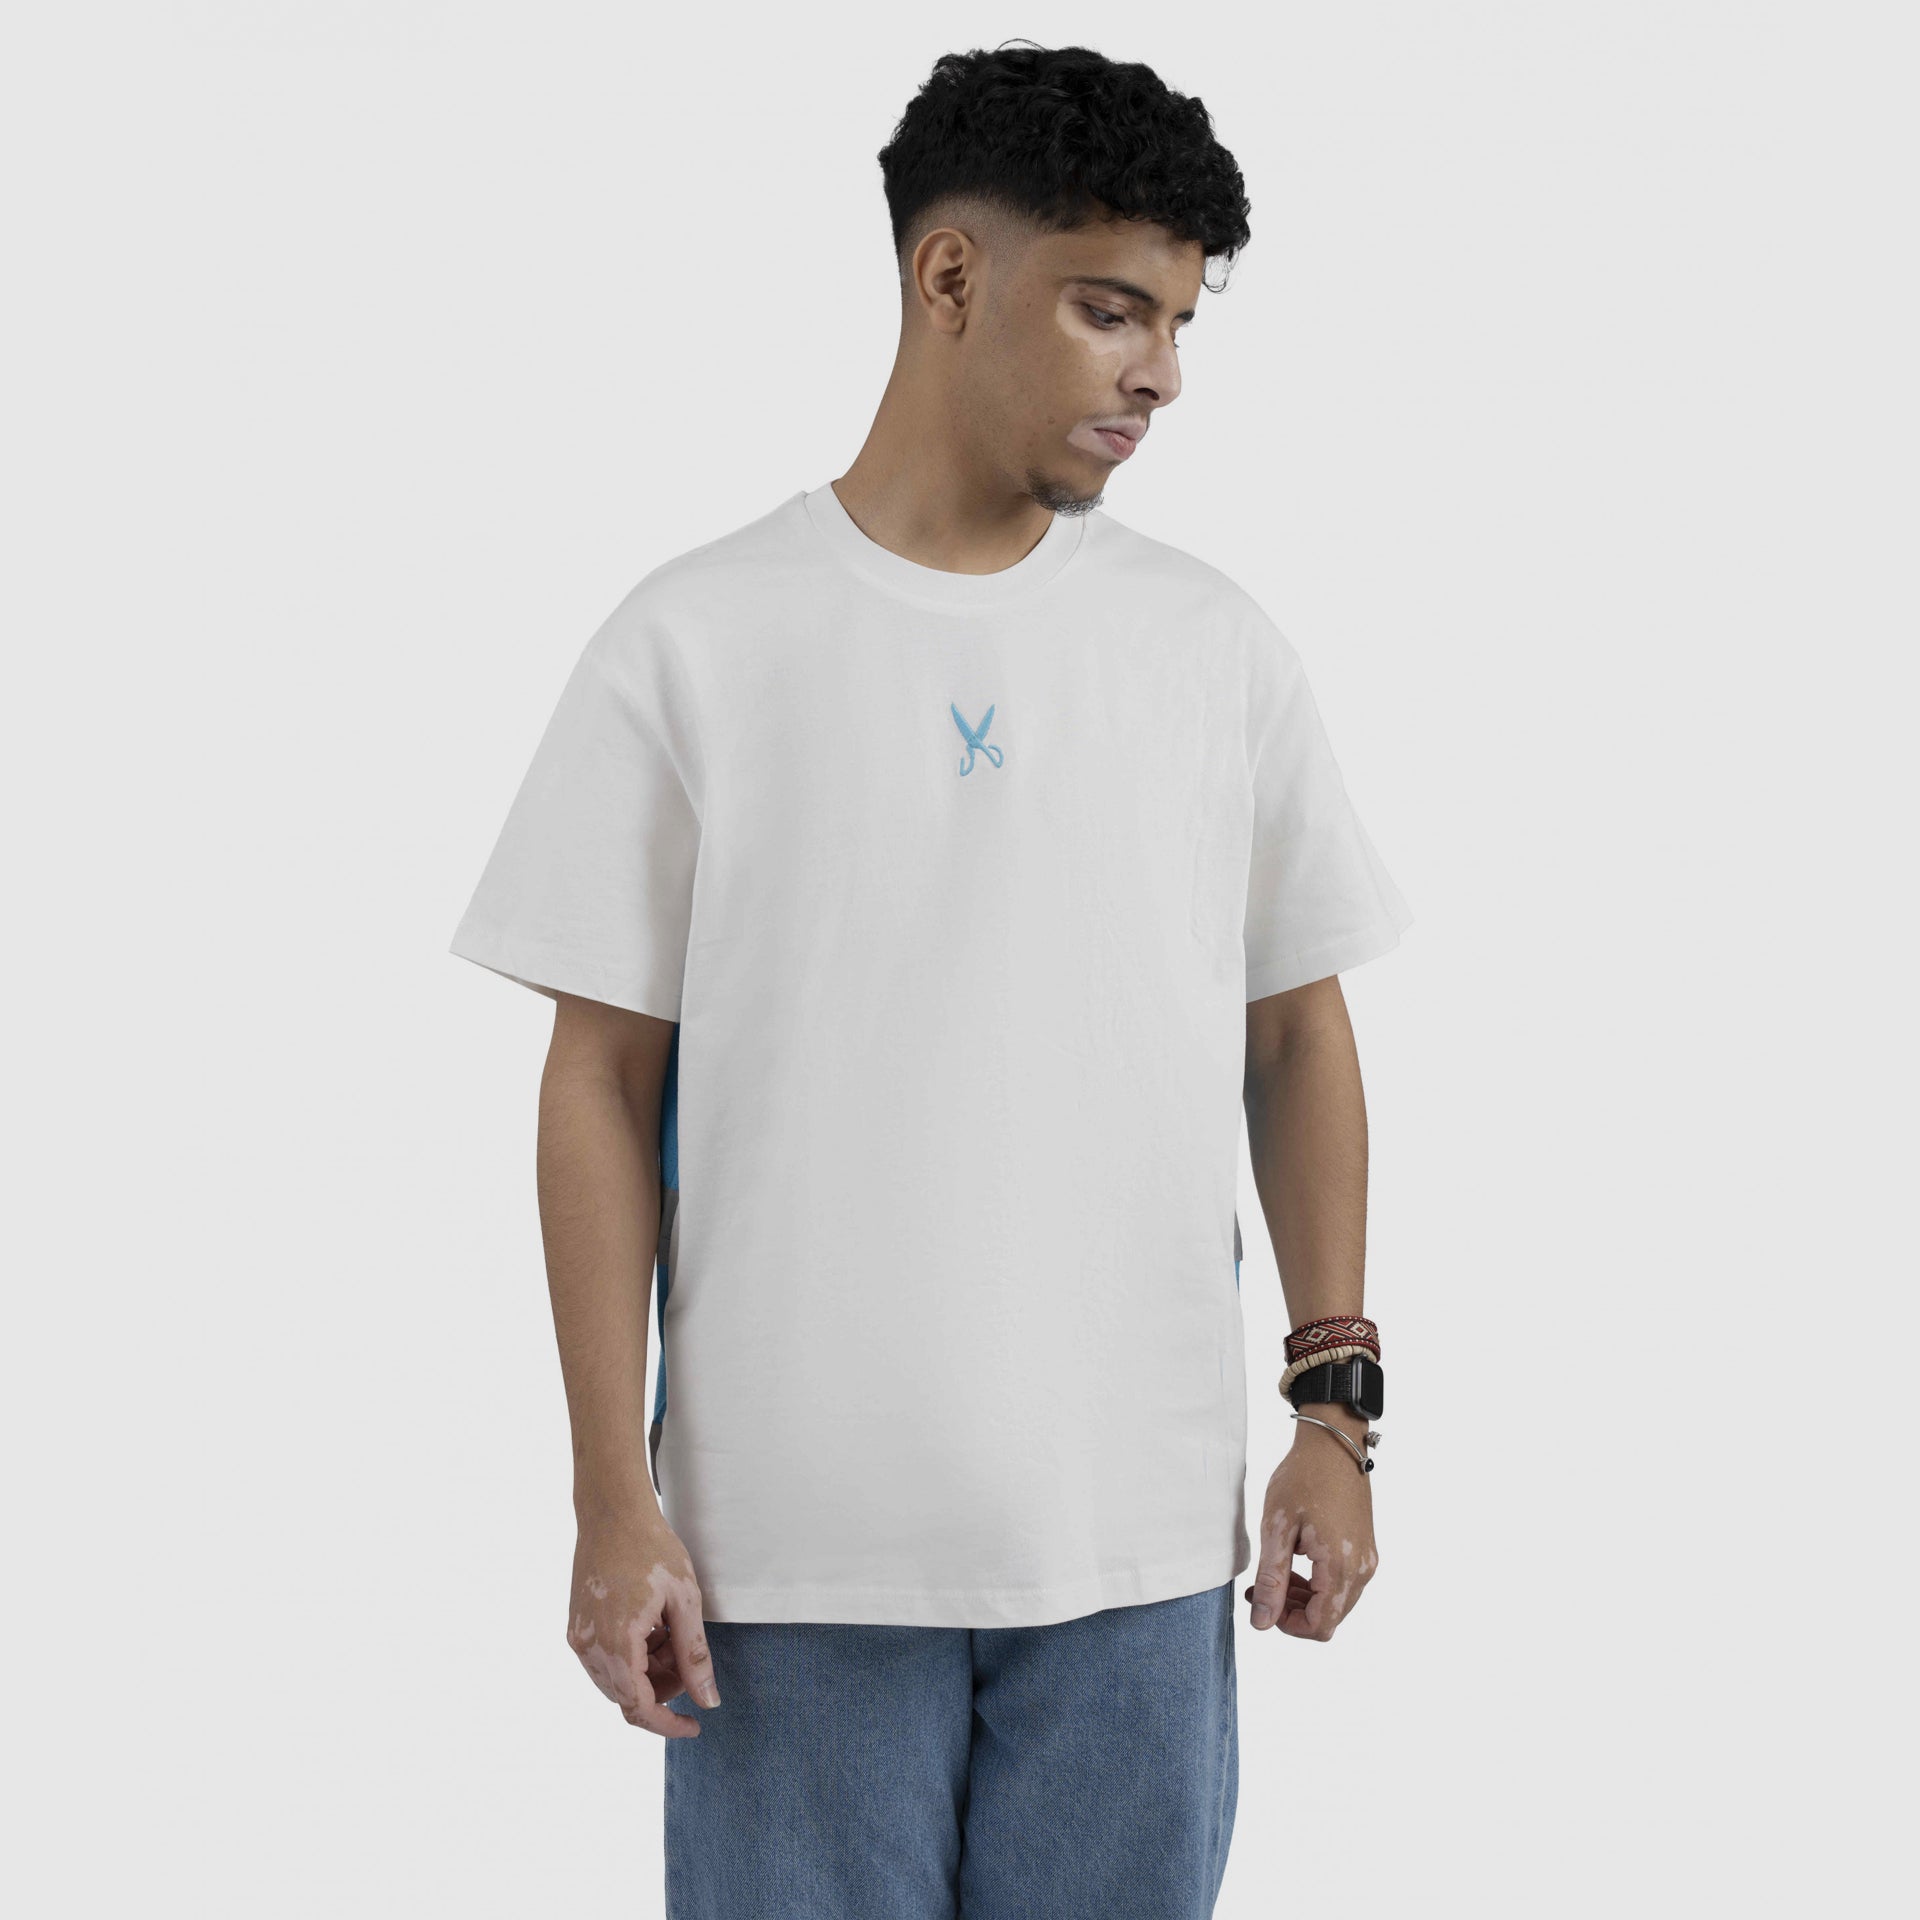 White & Baby Blue Underground T-shirt From Weaver Design